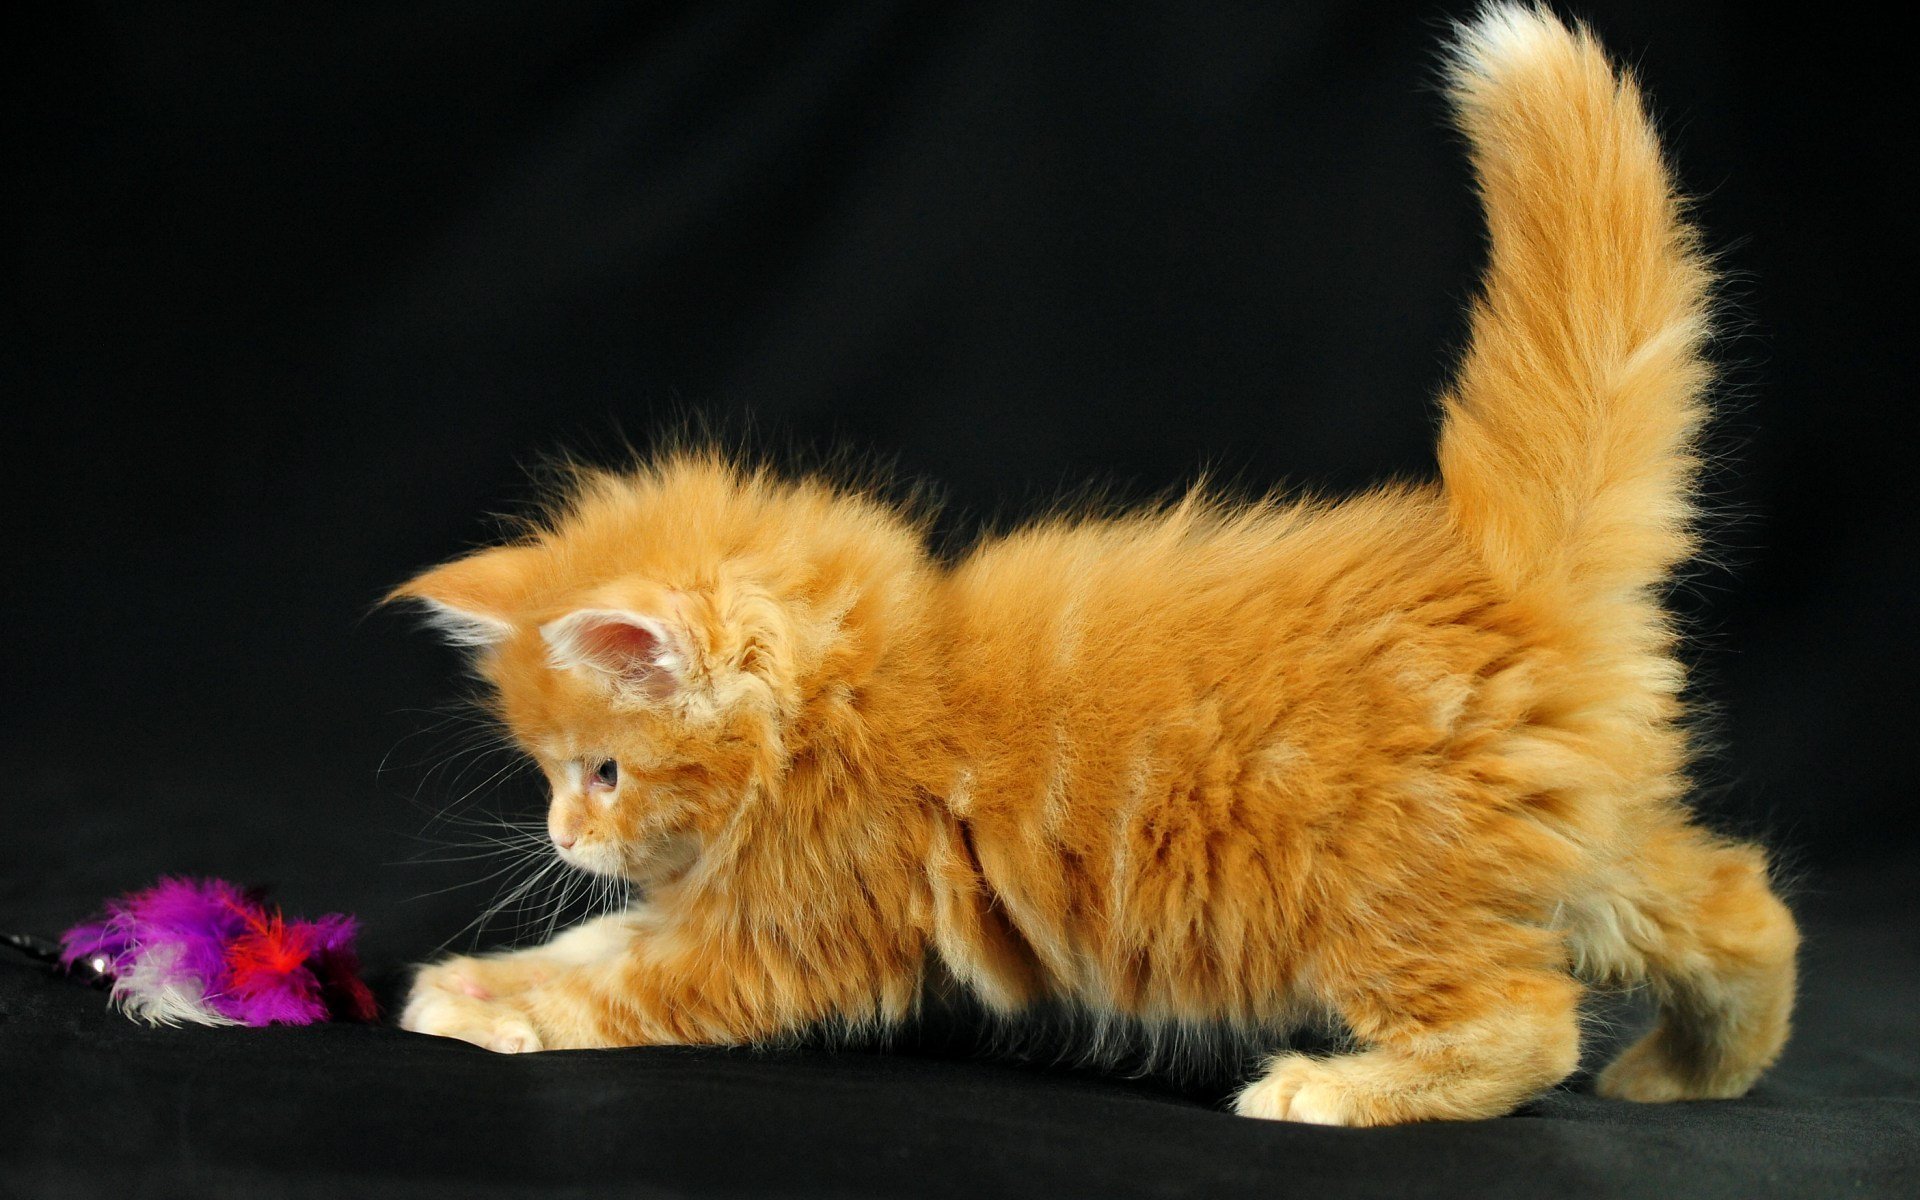 Как называется киса. Манчкин и Мейн кун. Манчкин рыжий котенок. Манчкин кот пушистый рыжий. Мейн кун рыжий маленький.